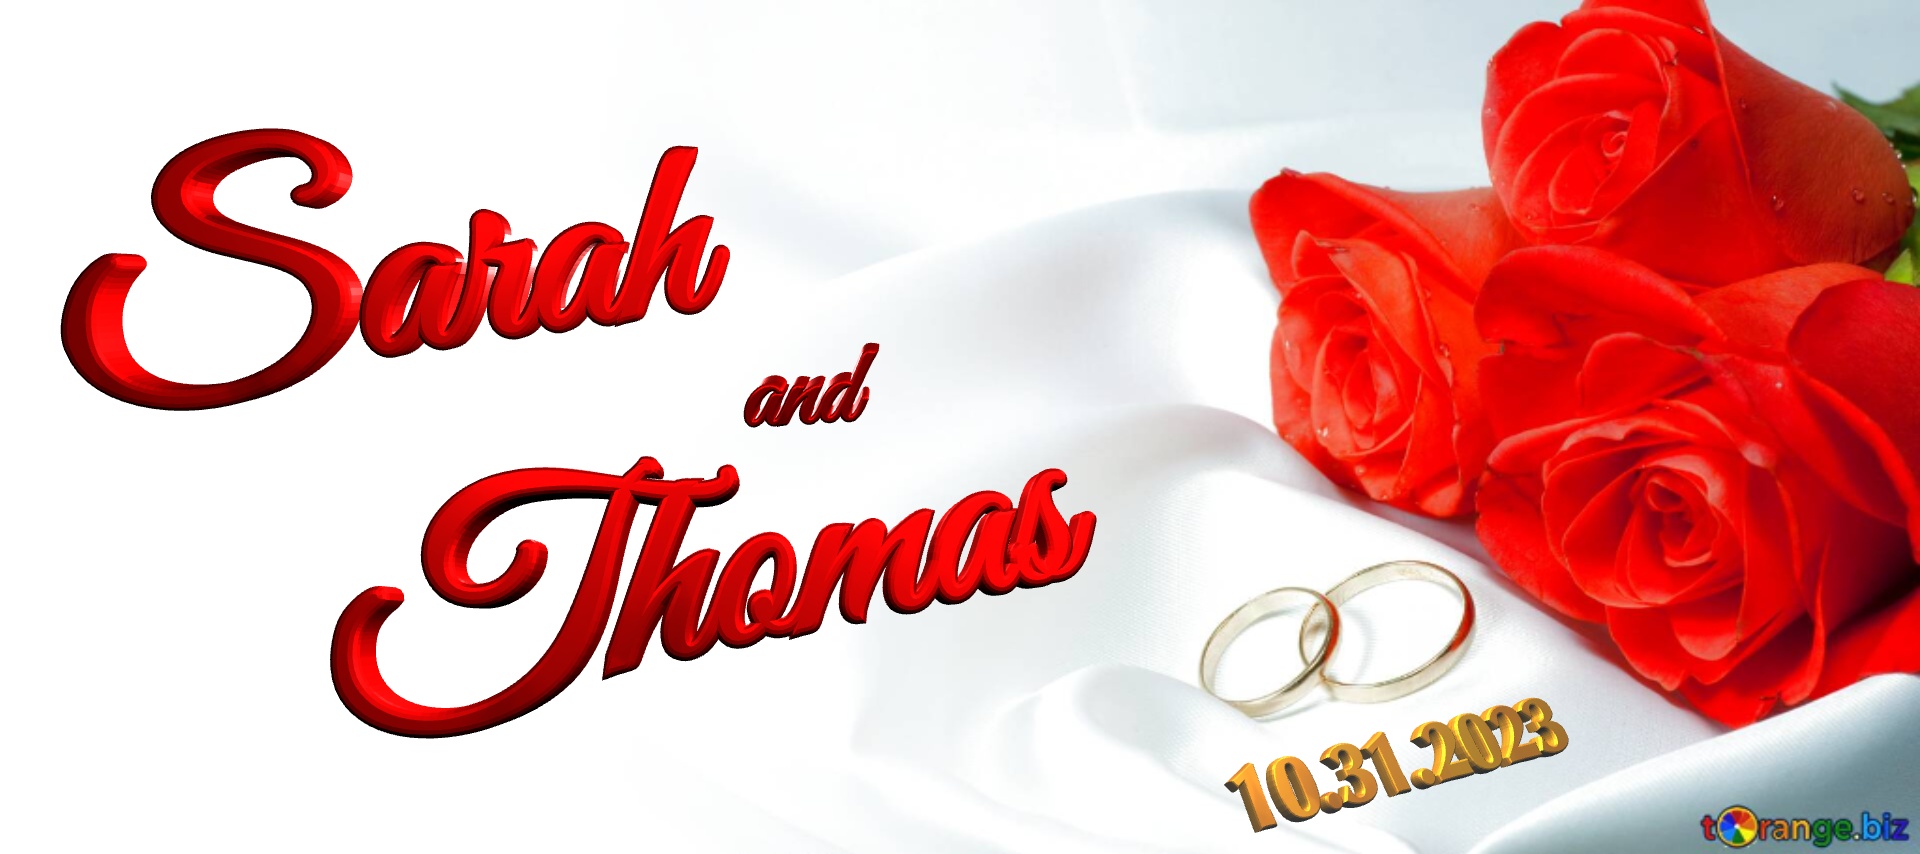 Sarah and Thomas 10.31.2023  Invitation wedding background №0